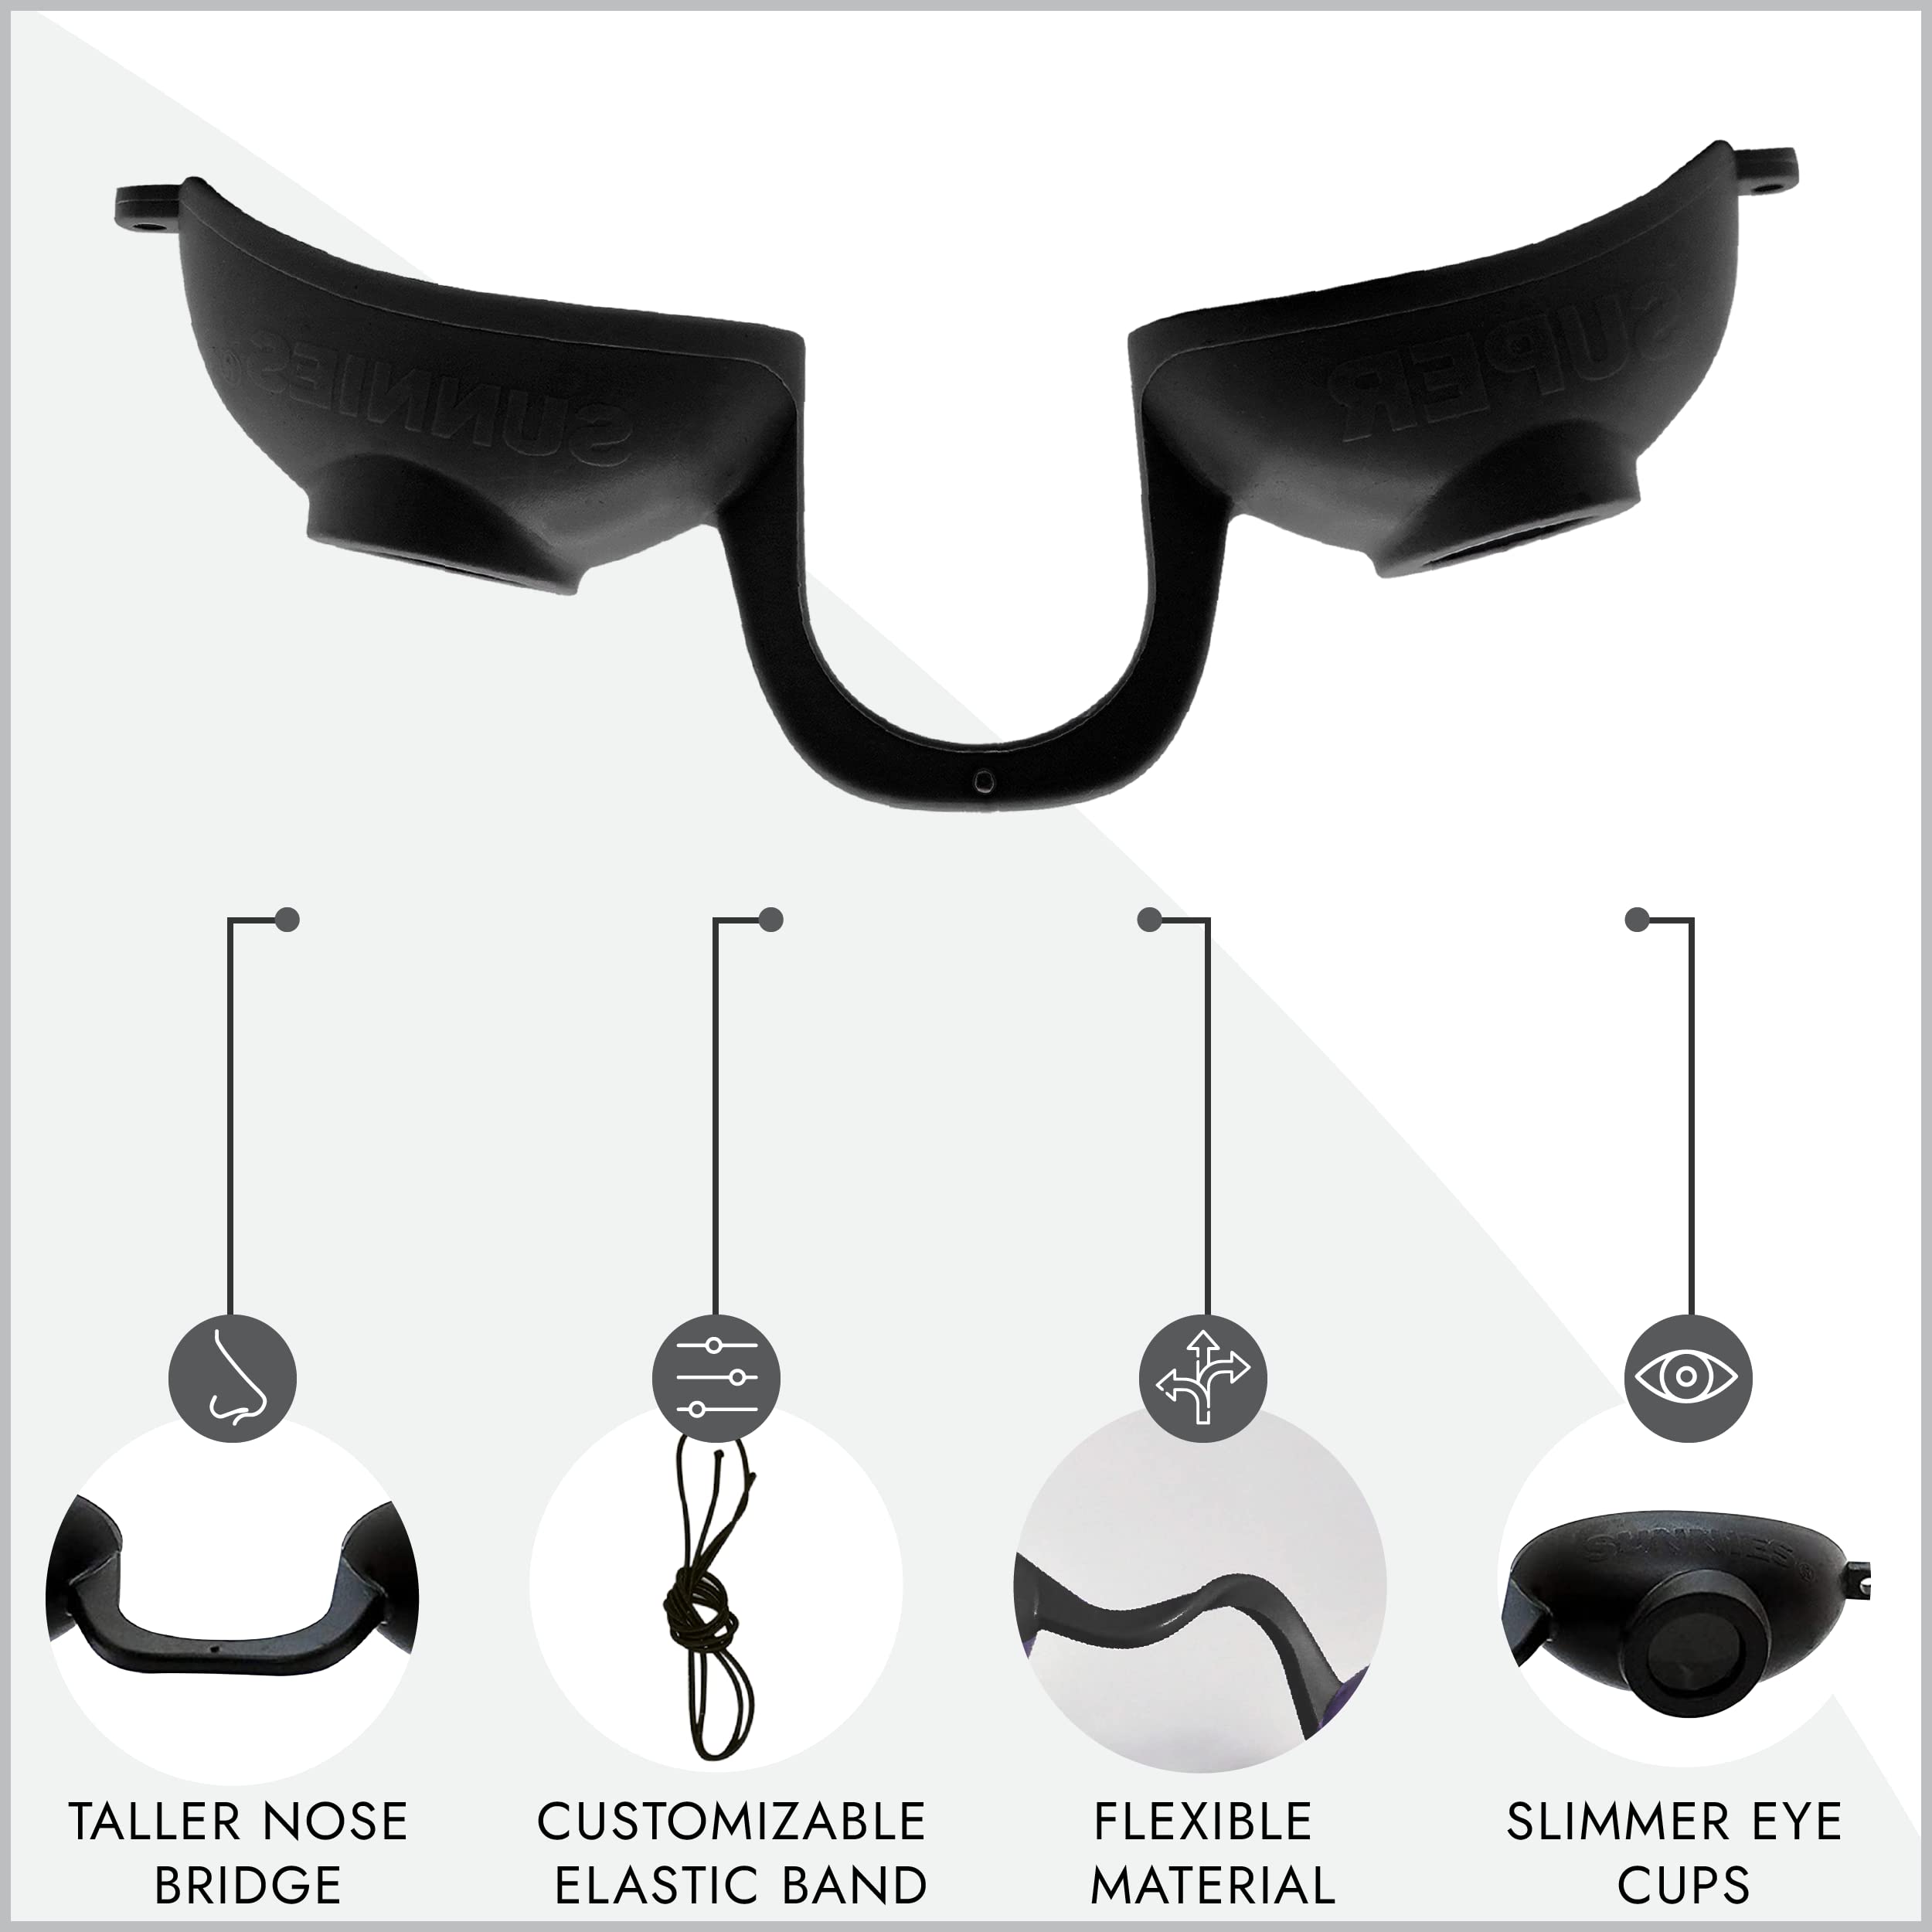 Super Sunnies Evo Flexible Tanning Bed Goggles UV Eye Protection Black Glasses, FDA Compliant